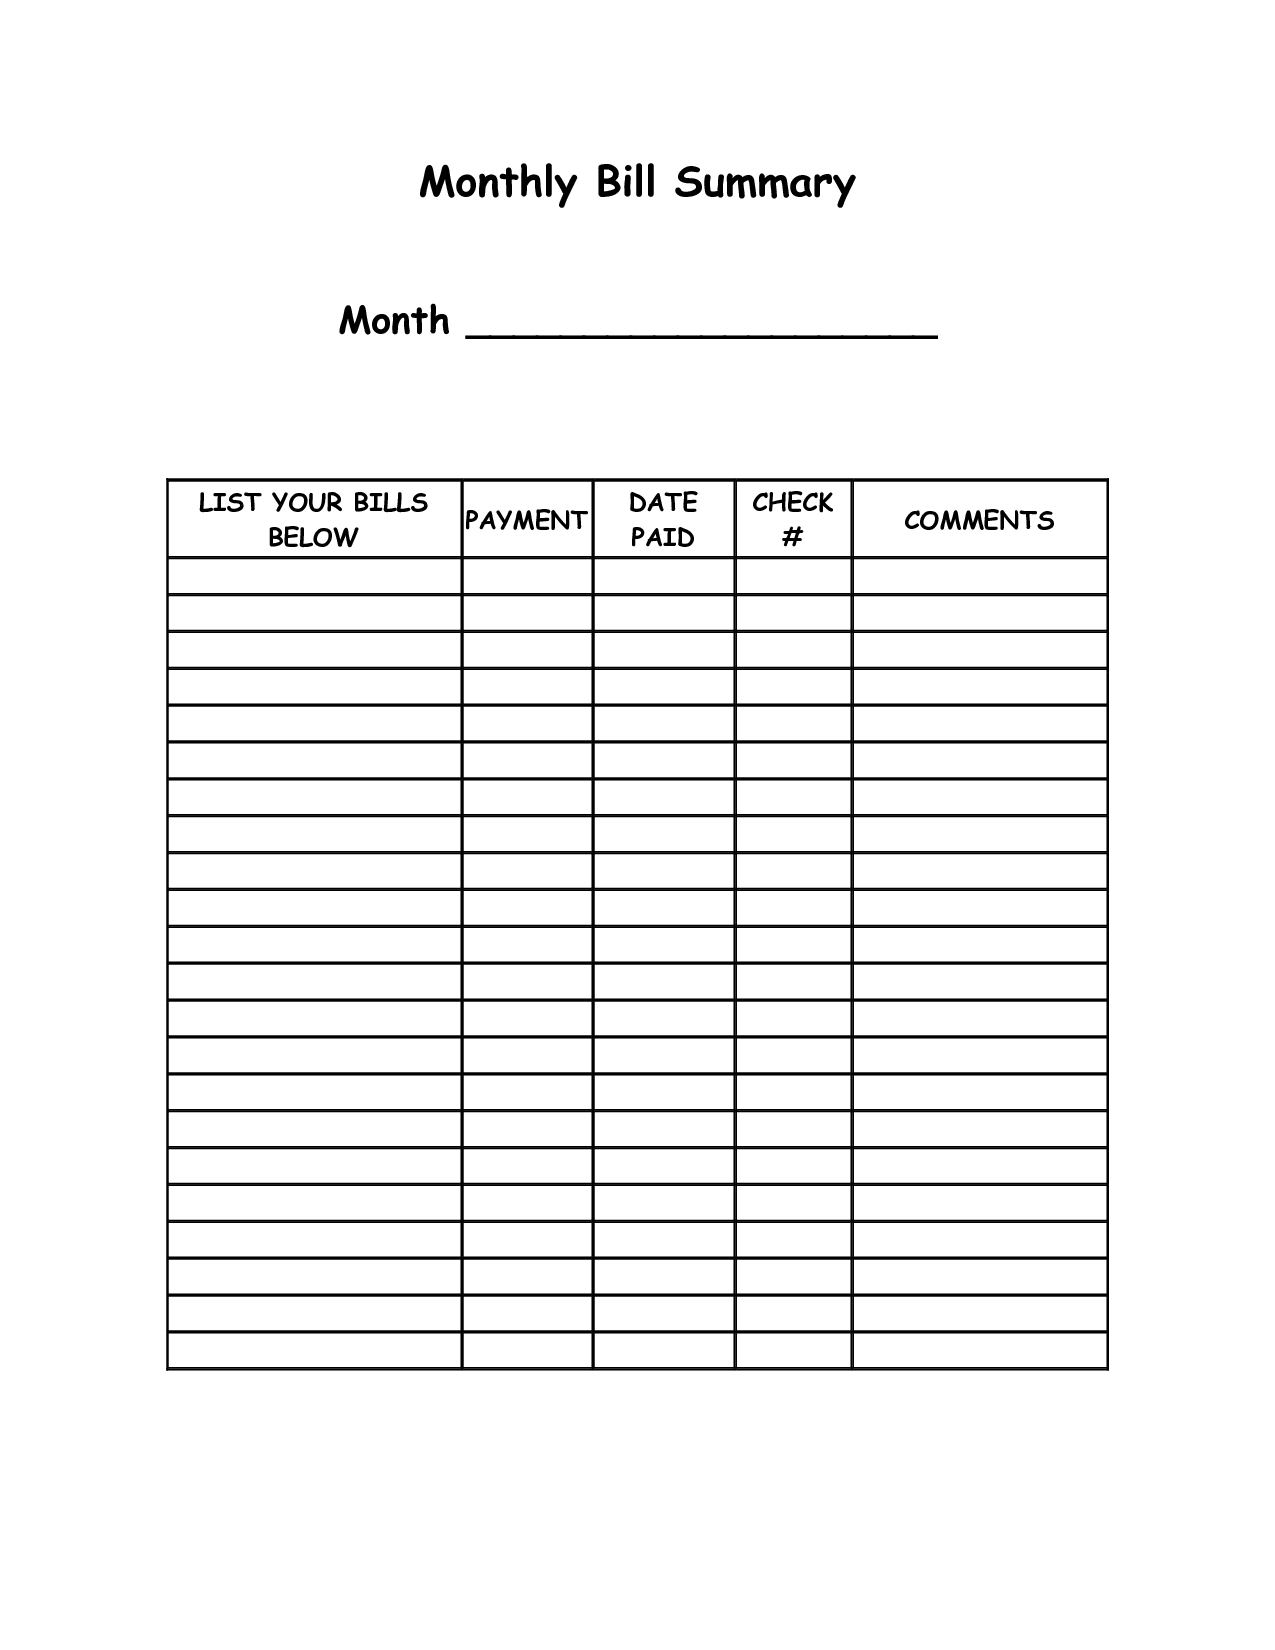 Monthly Bill Summary Doc | Organization | Bill Payment Organization with regard to Free Monthly Bill Payment Sheet